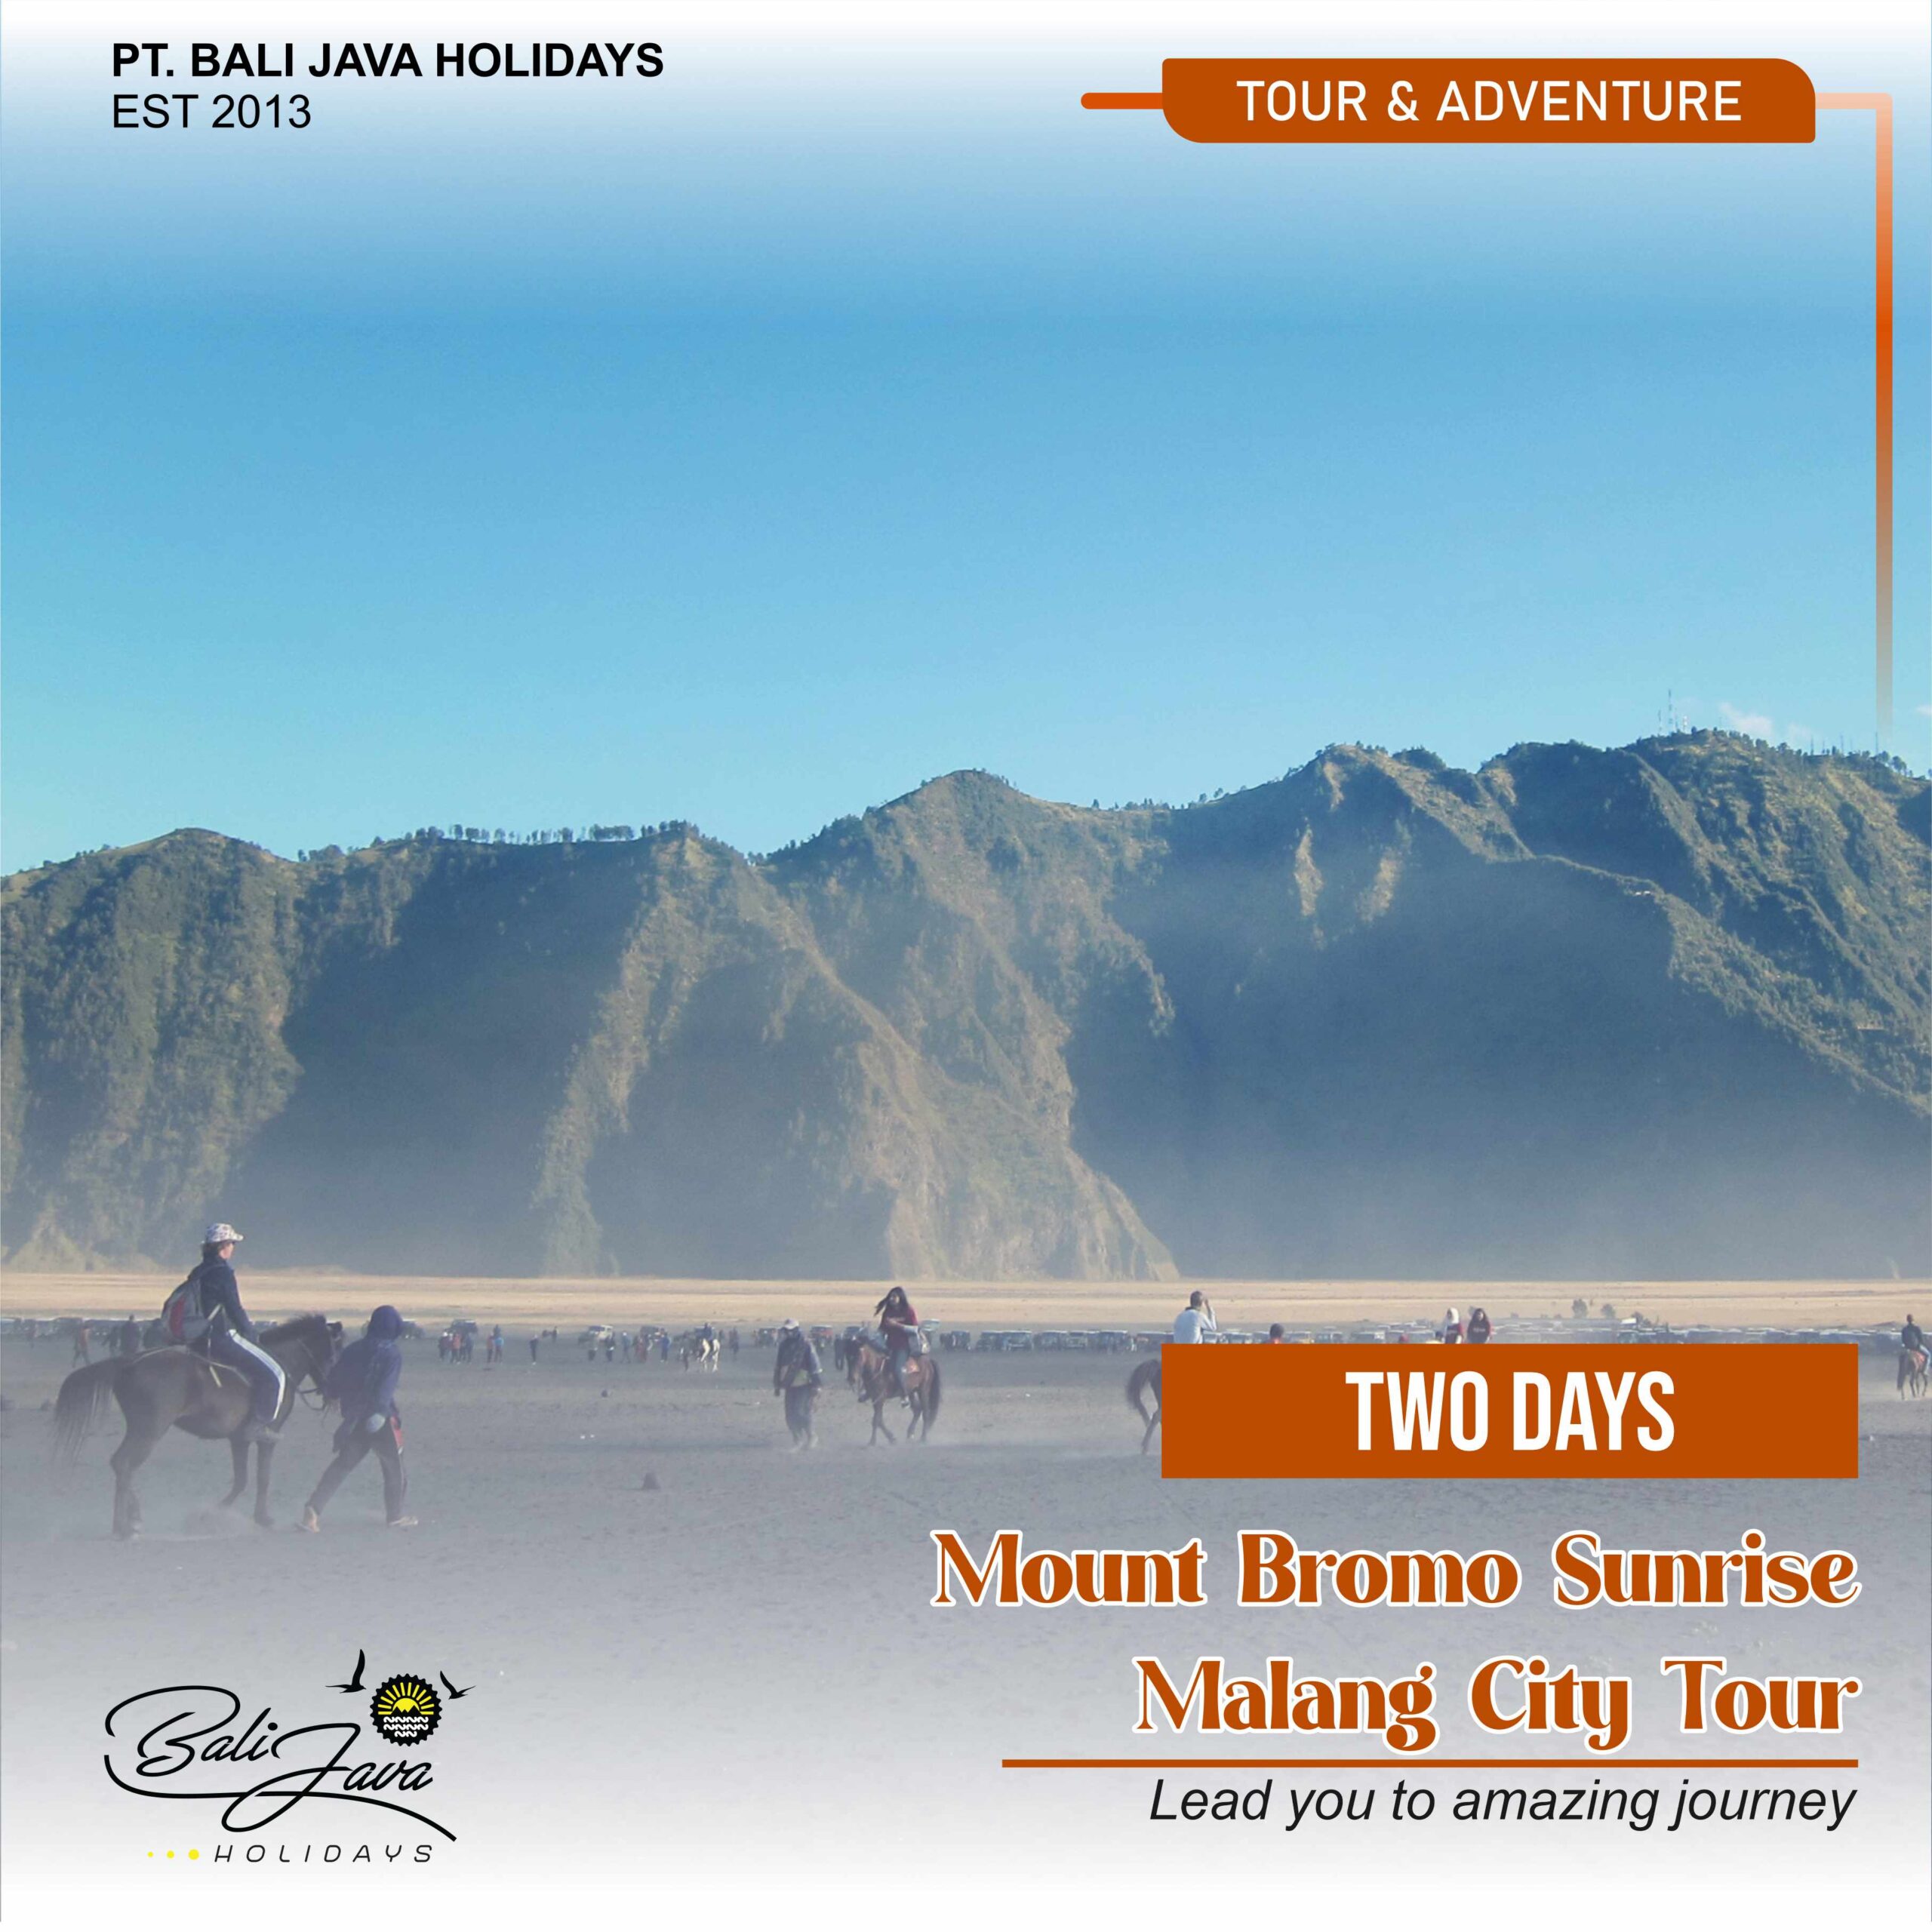 Mount Bromo Sunrise & Malang City Tour 2 Days